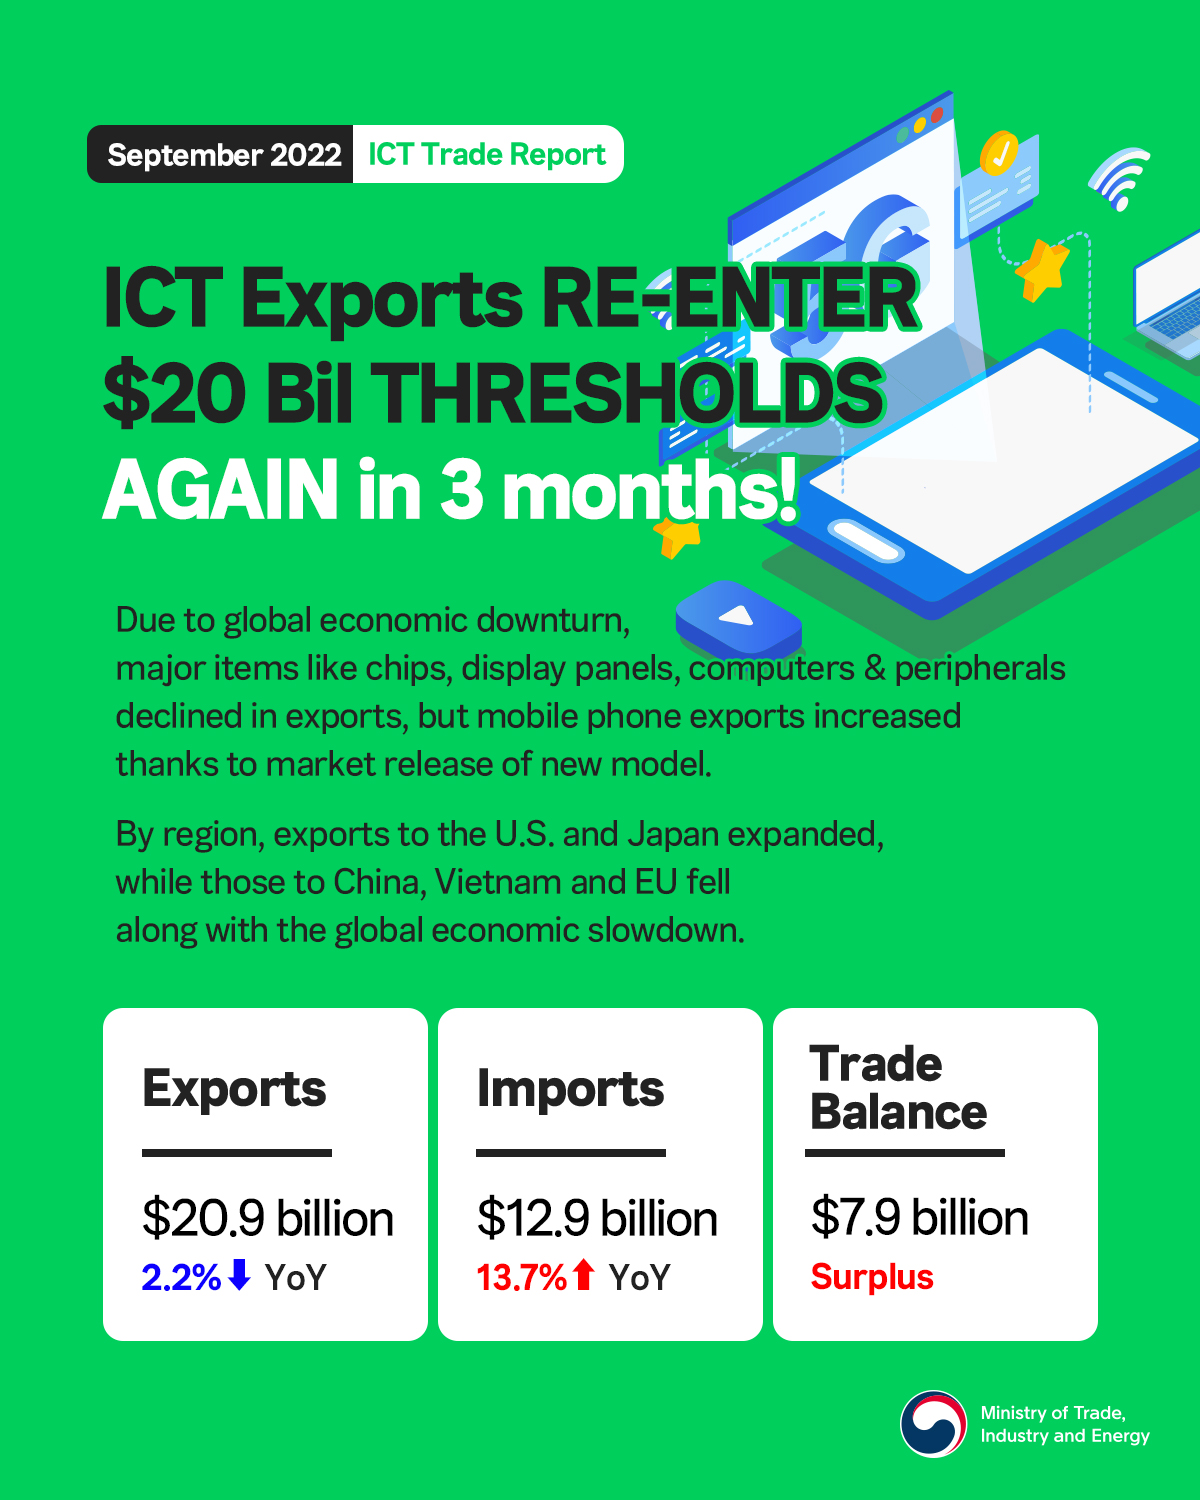 Korea's ICT trade achieves $7.9 billion surplus in September Image 0